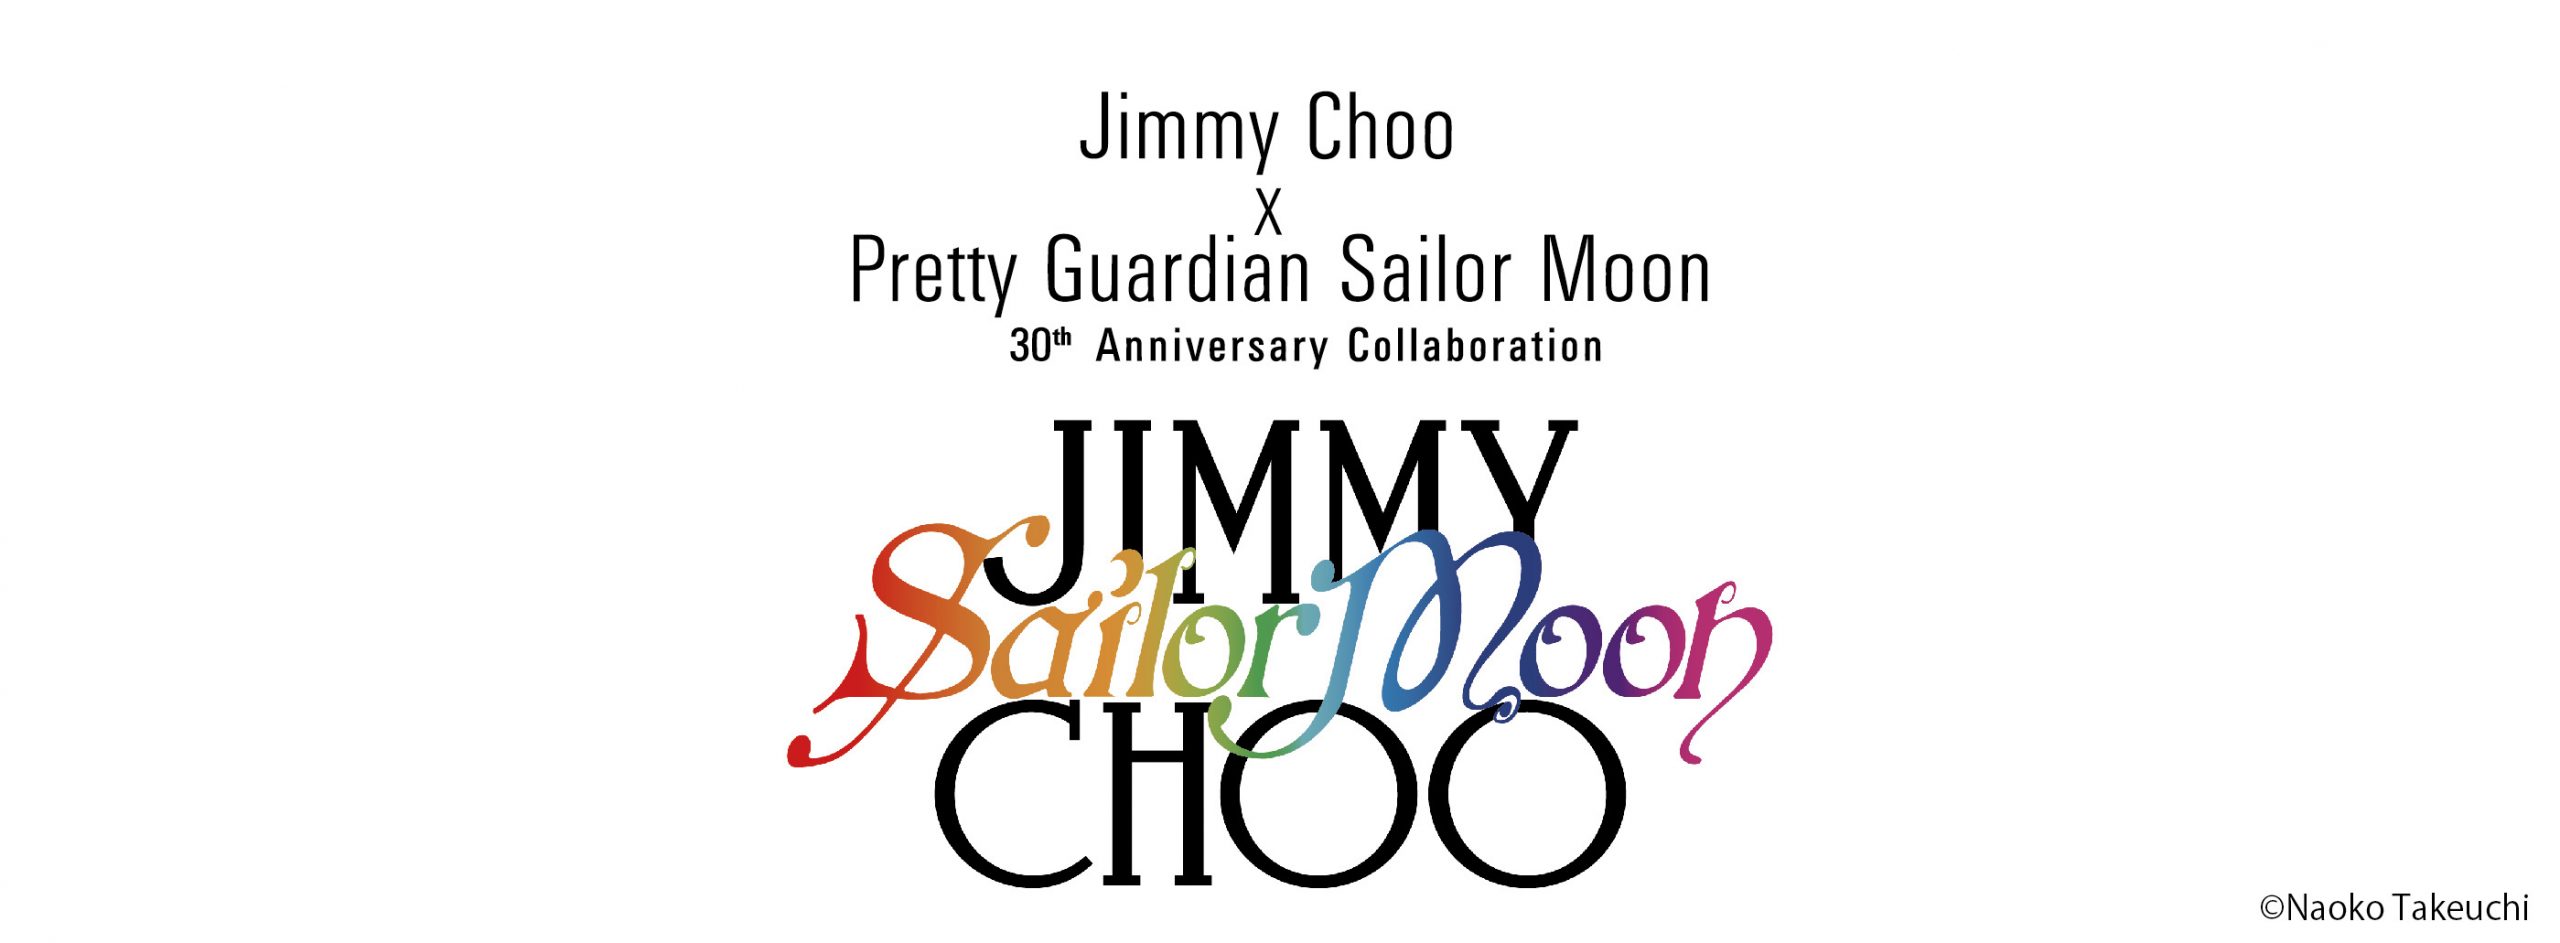 $15,000 SAILOR MOON Jimmy Choo Boots Are Shiny and Absurd - Nerdist